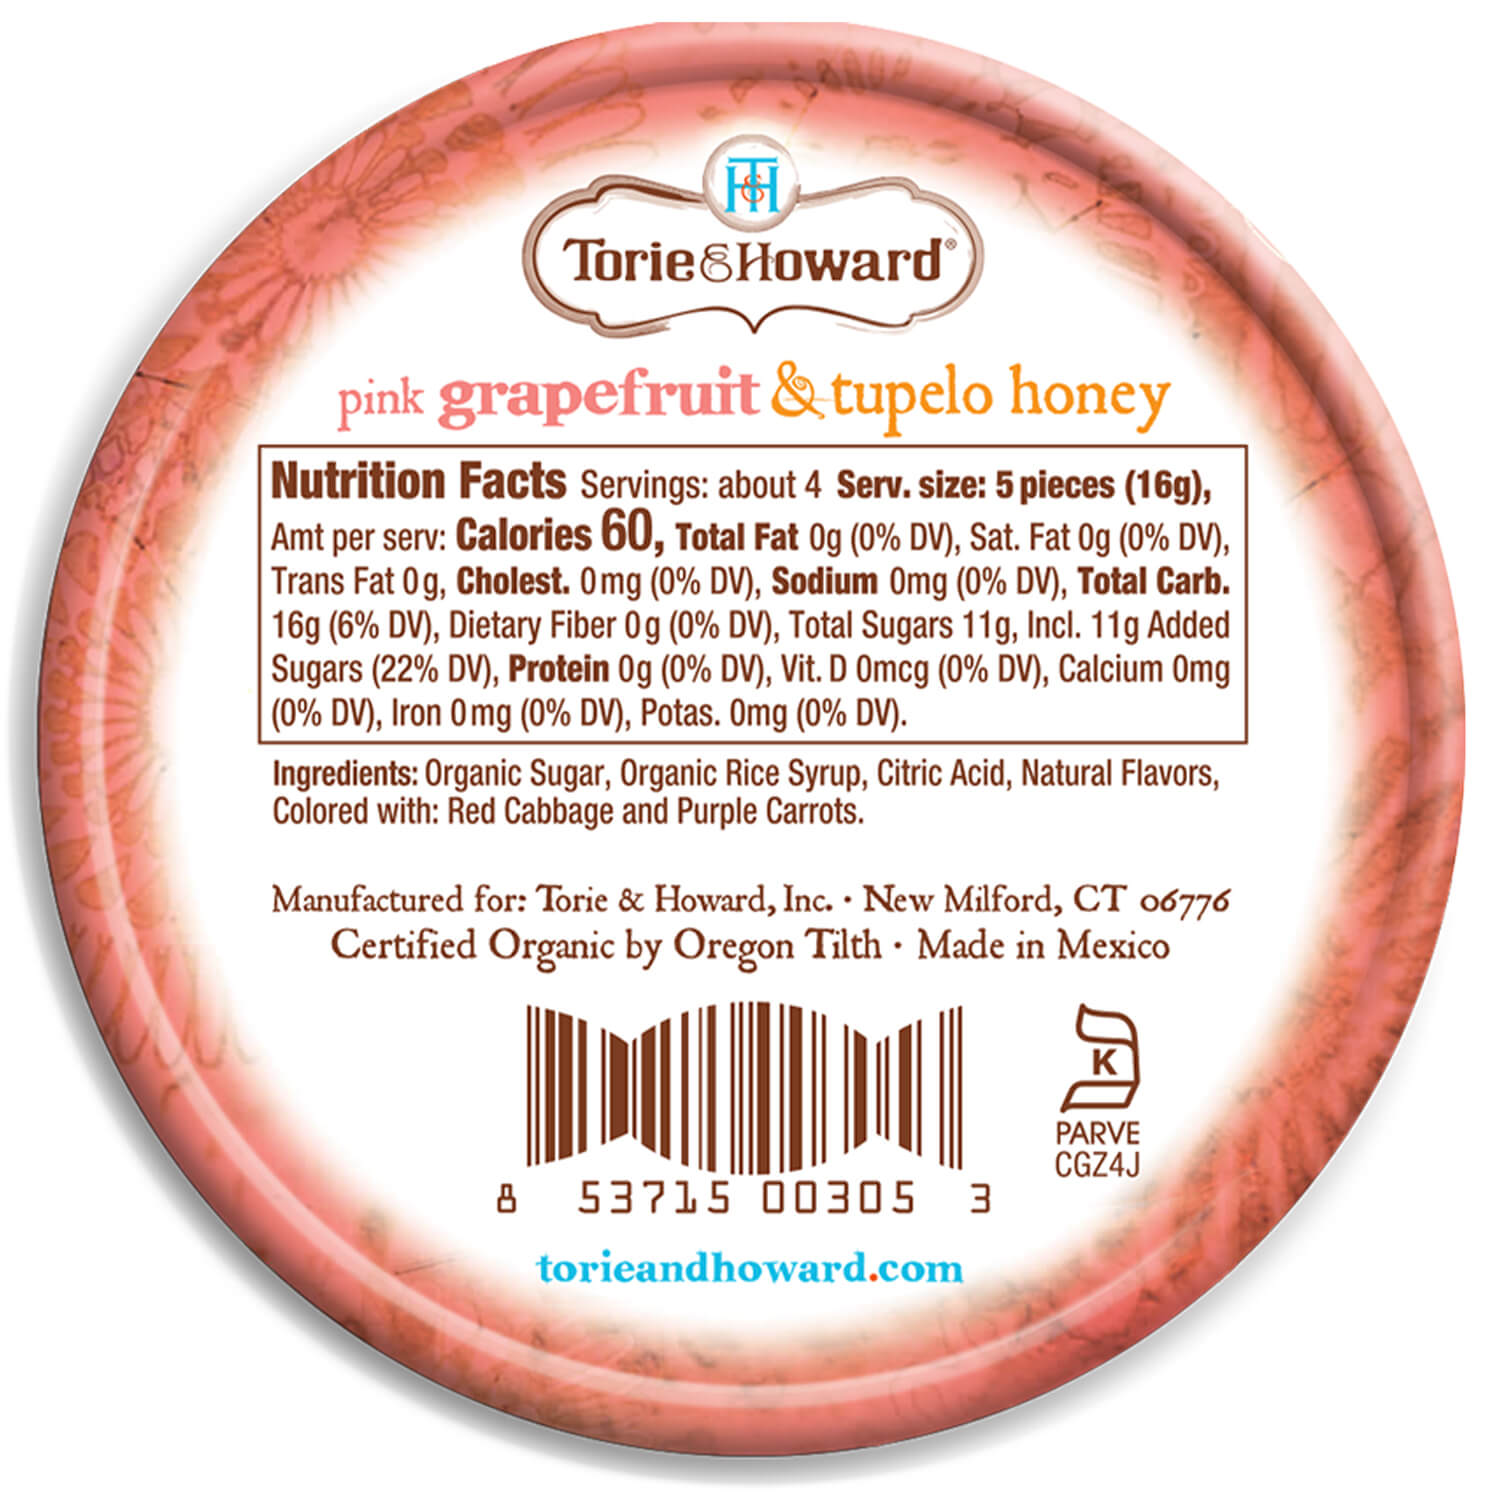 Torie & Howard Grapefruit and Tupelo Honey Organic Hard Candy Tins 2oz Tins